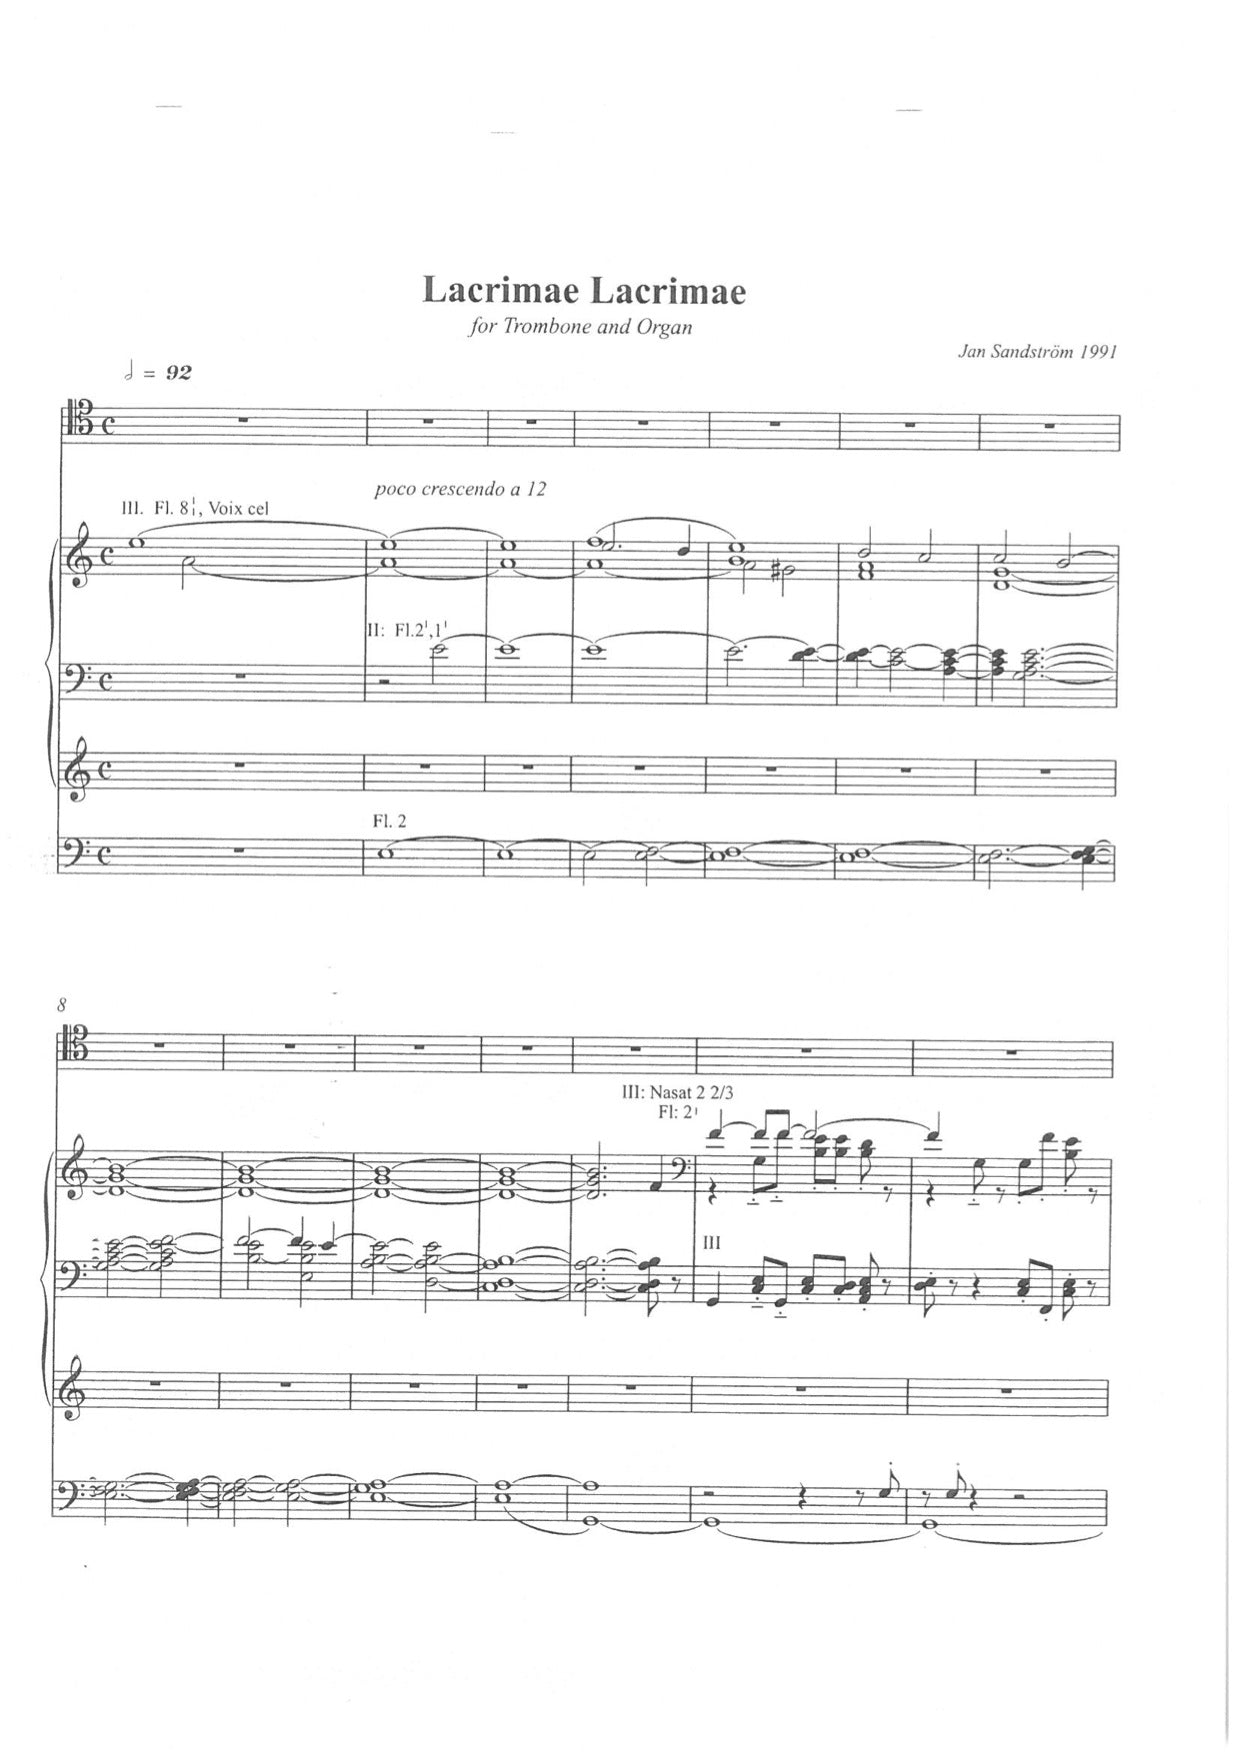 Jan Sandström - Lacrimae Lacrimae for Tenor Trombone